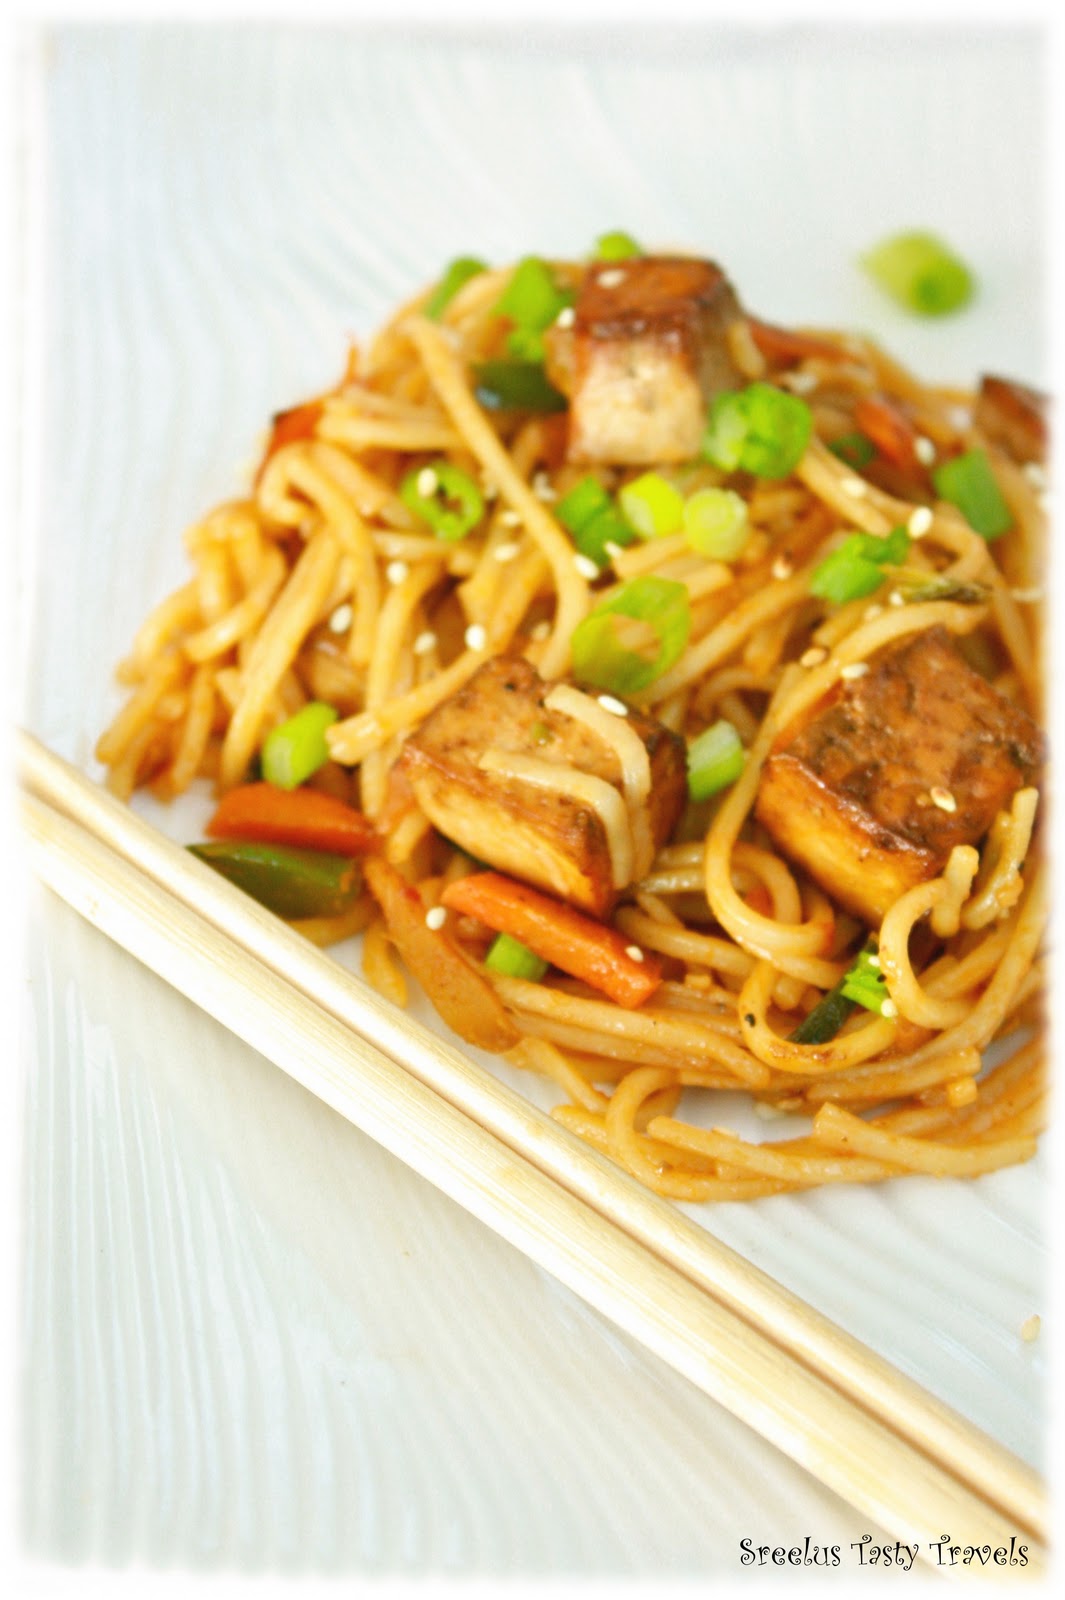 Sreelus Tasty Travels: Spicy Marinated & Baked Tofu Noodles